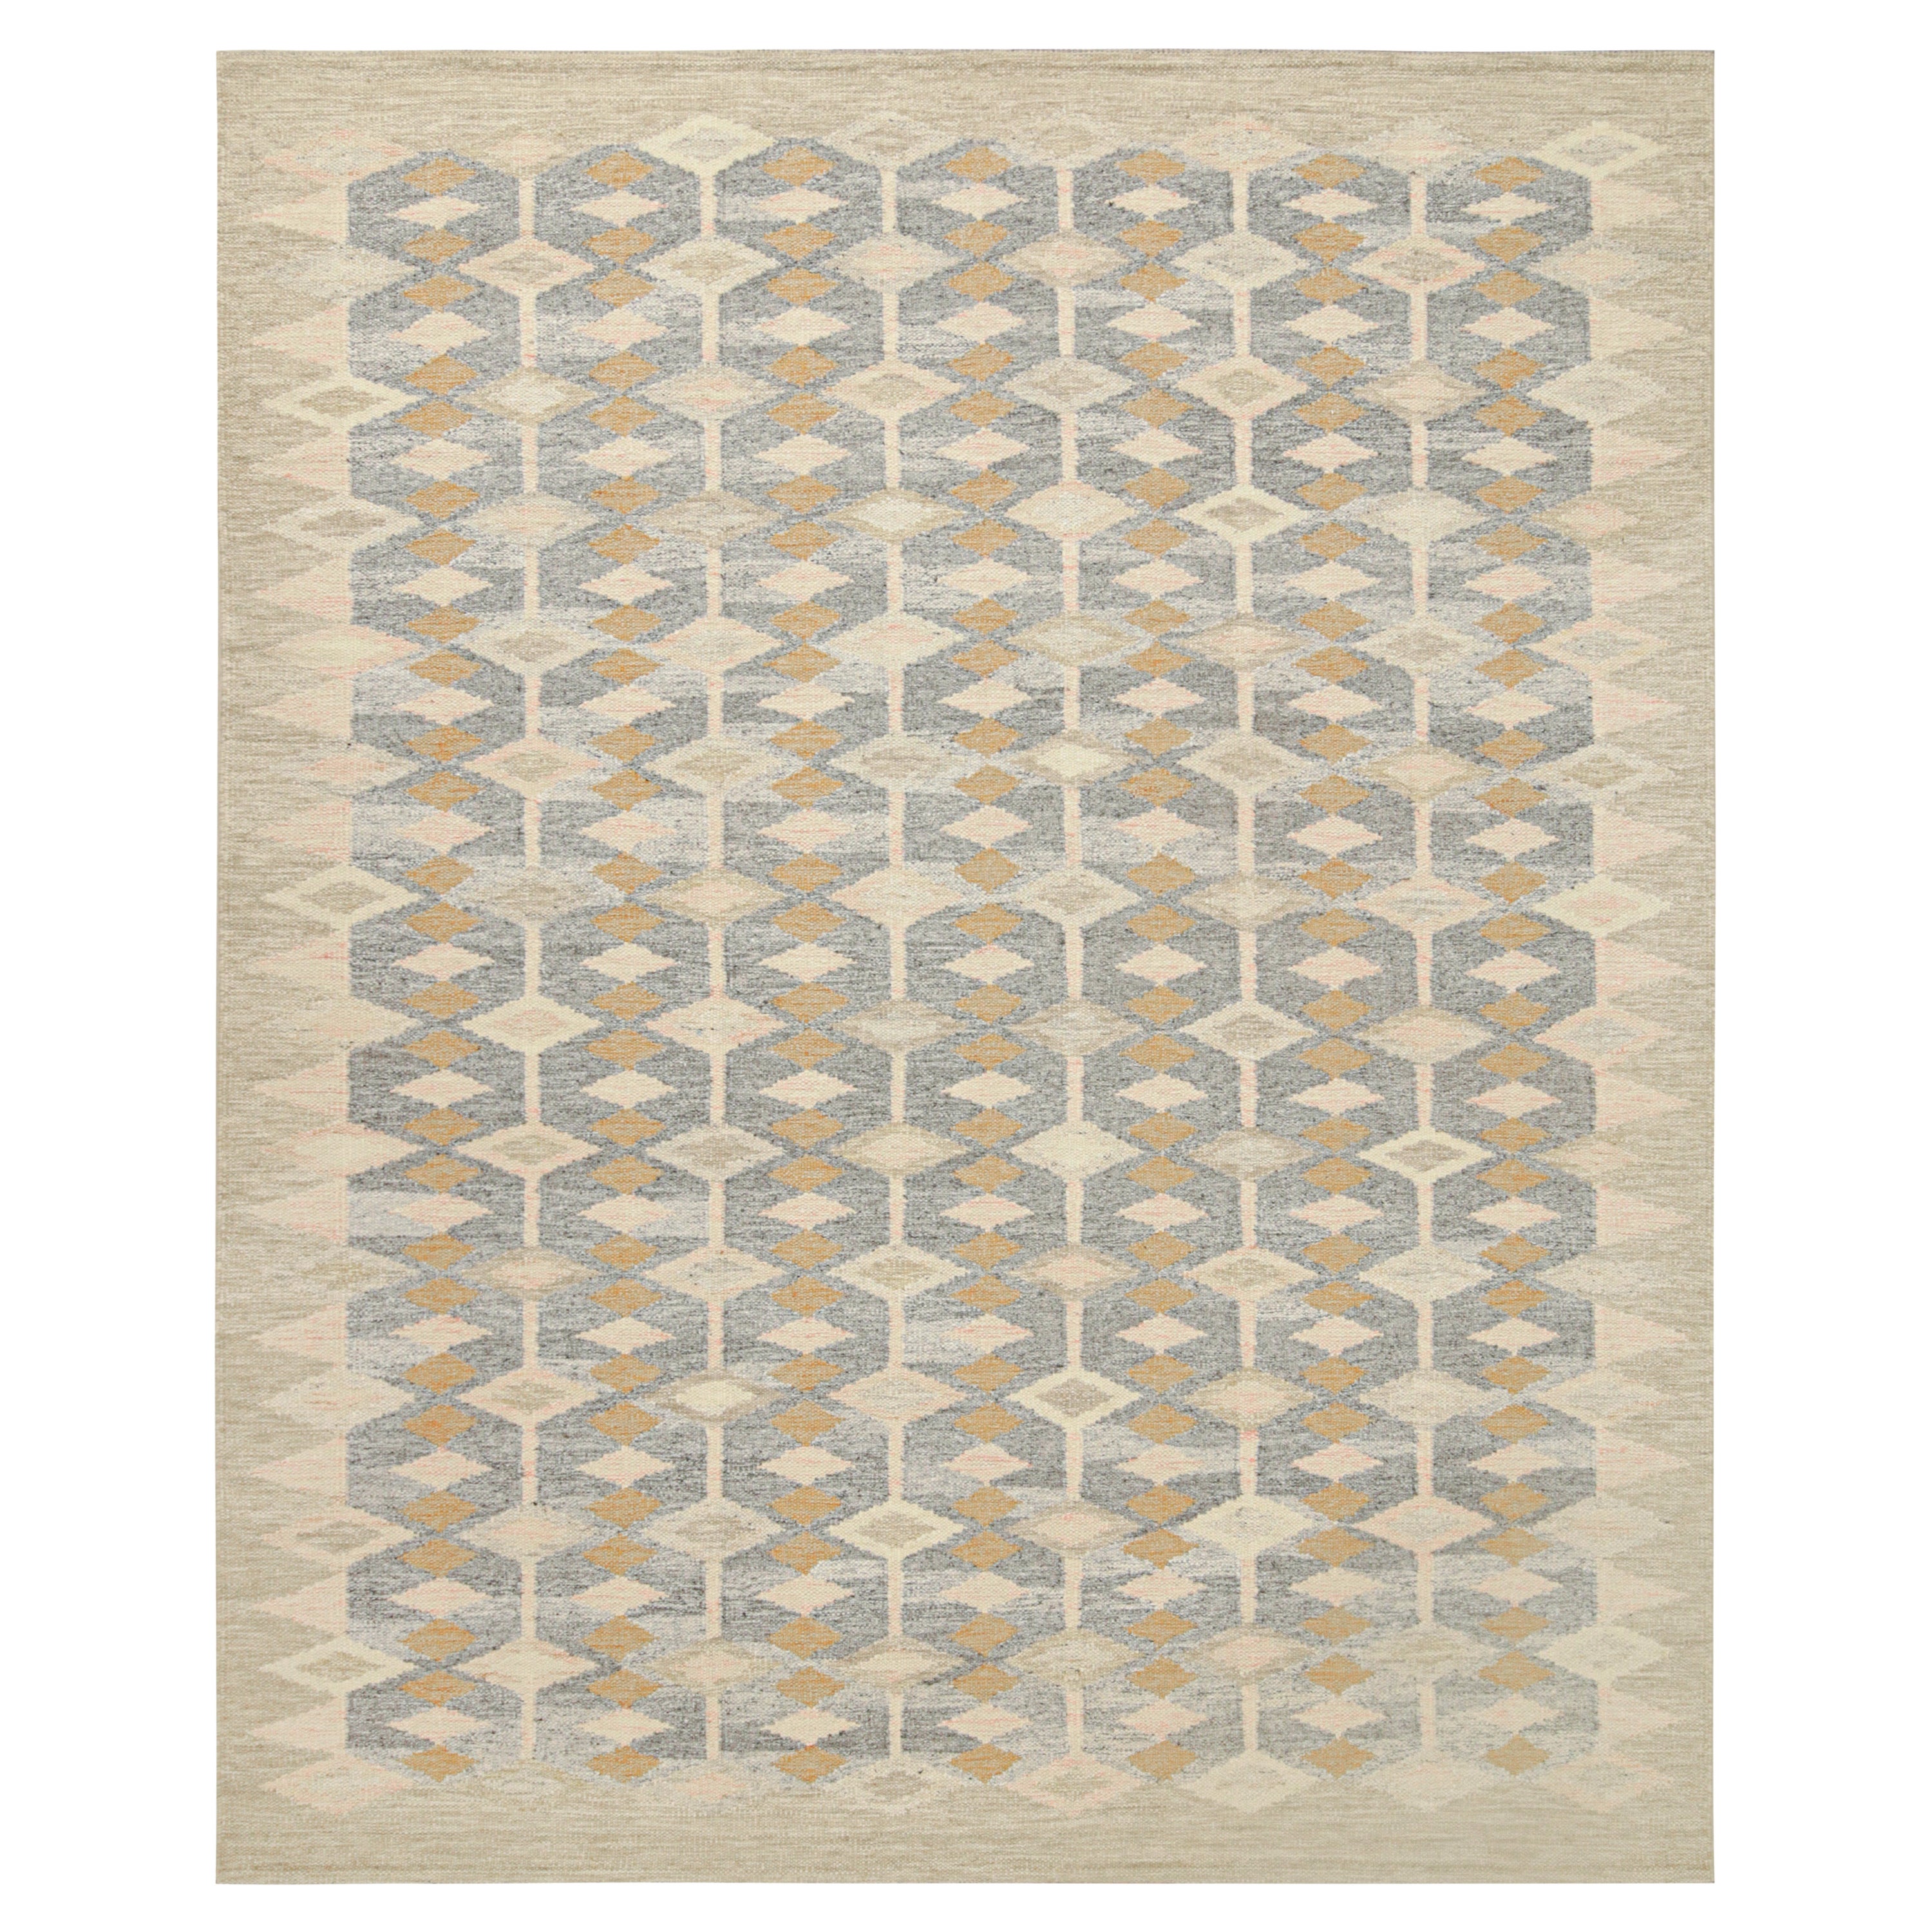 Rug & Kilim’s Scandinavian Style Kilim in Beige & Gray with Geometric Patterns